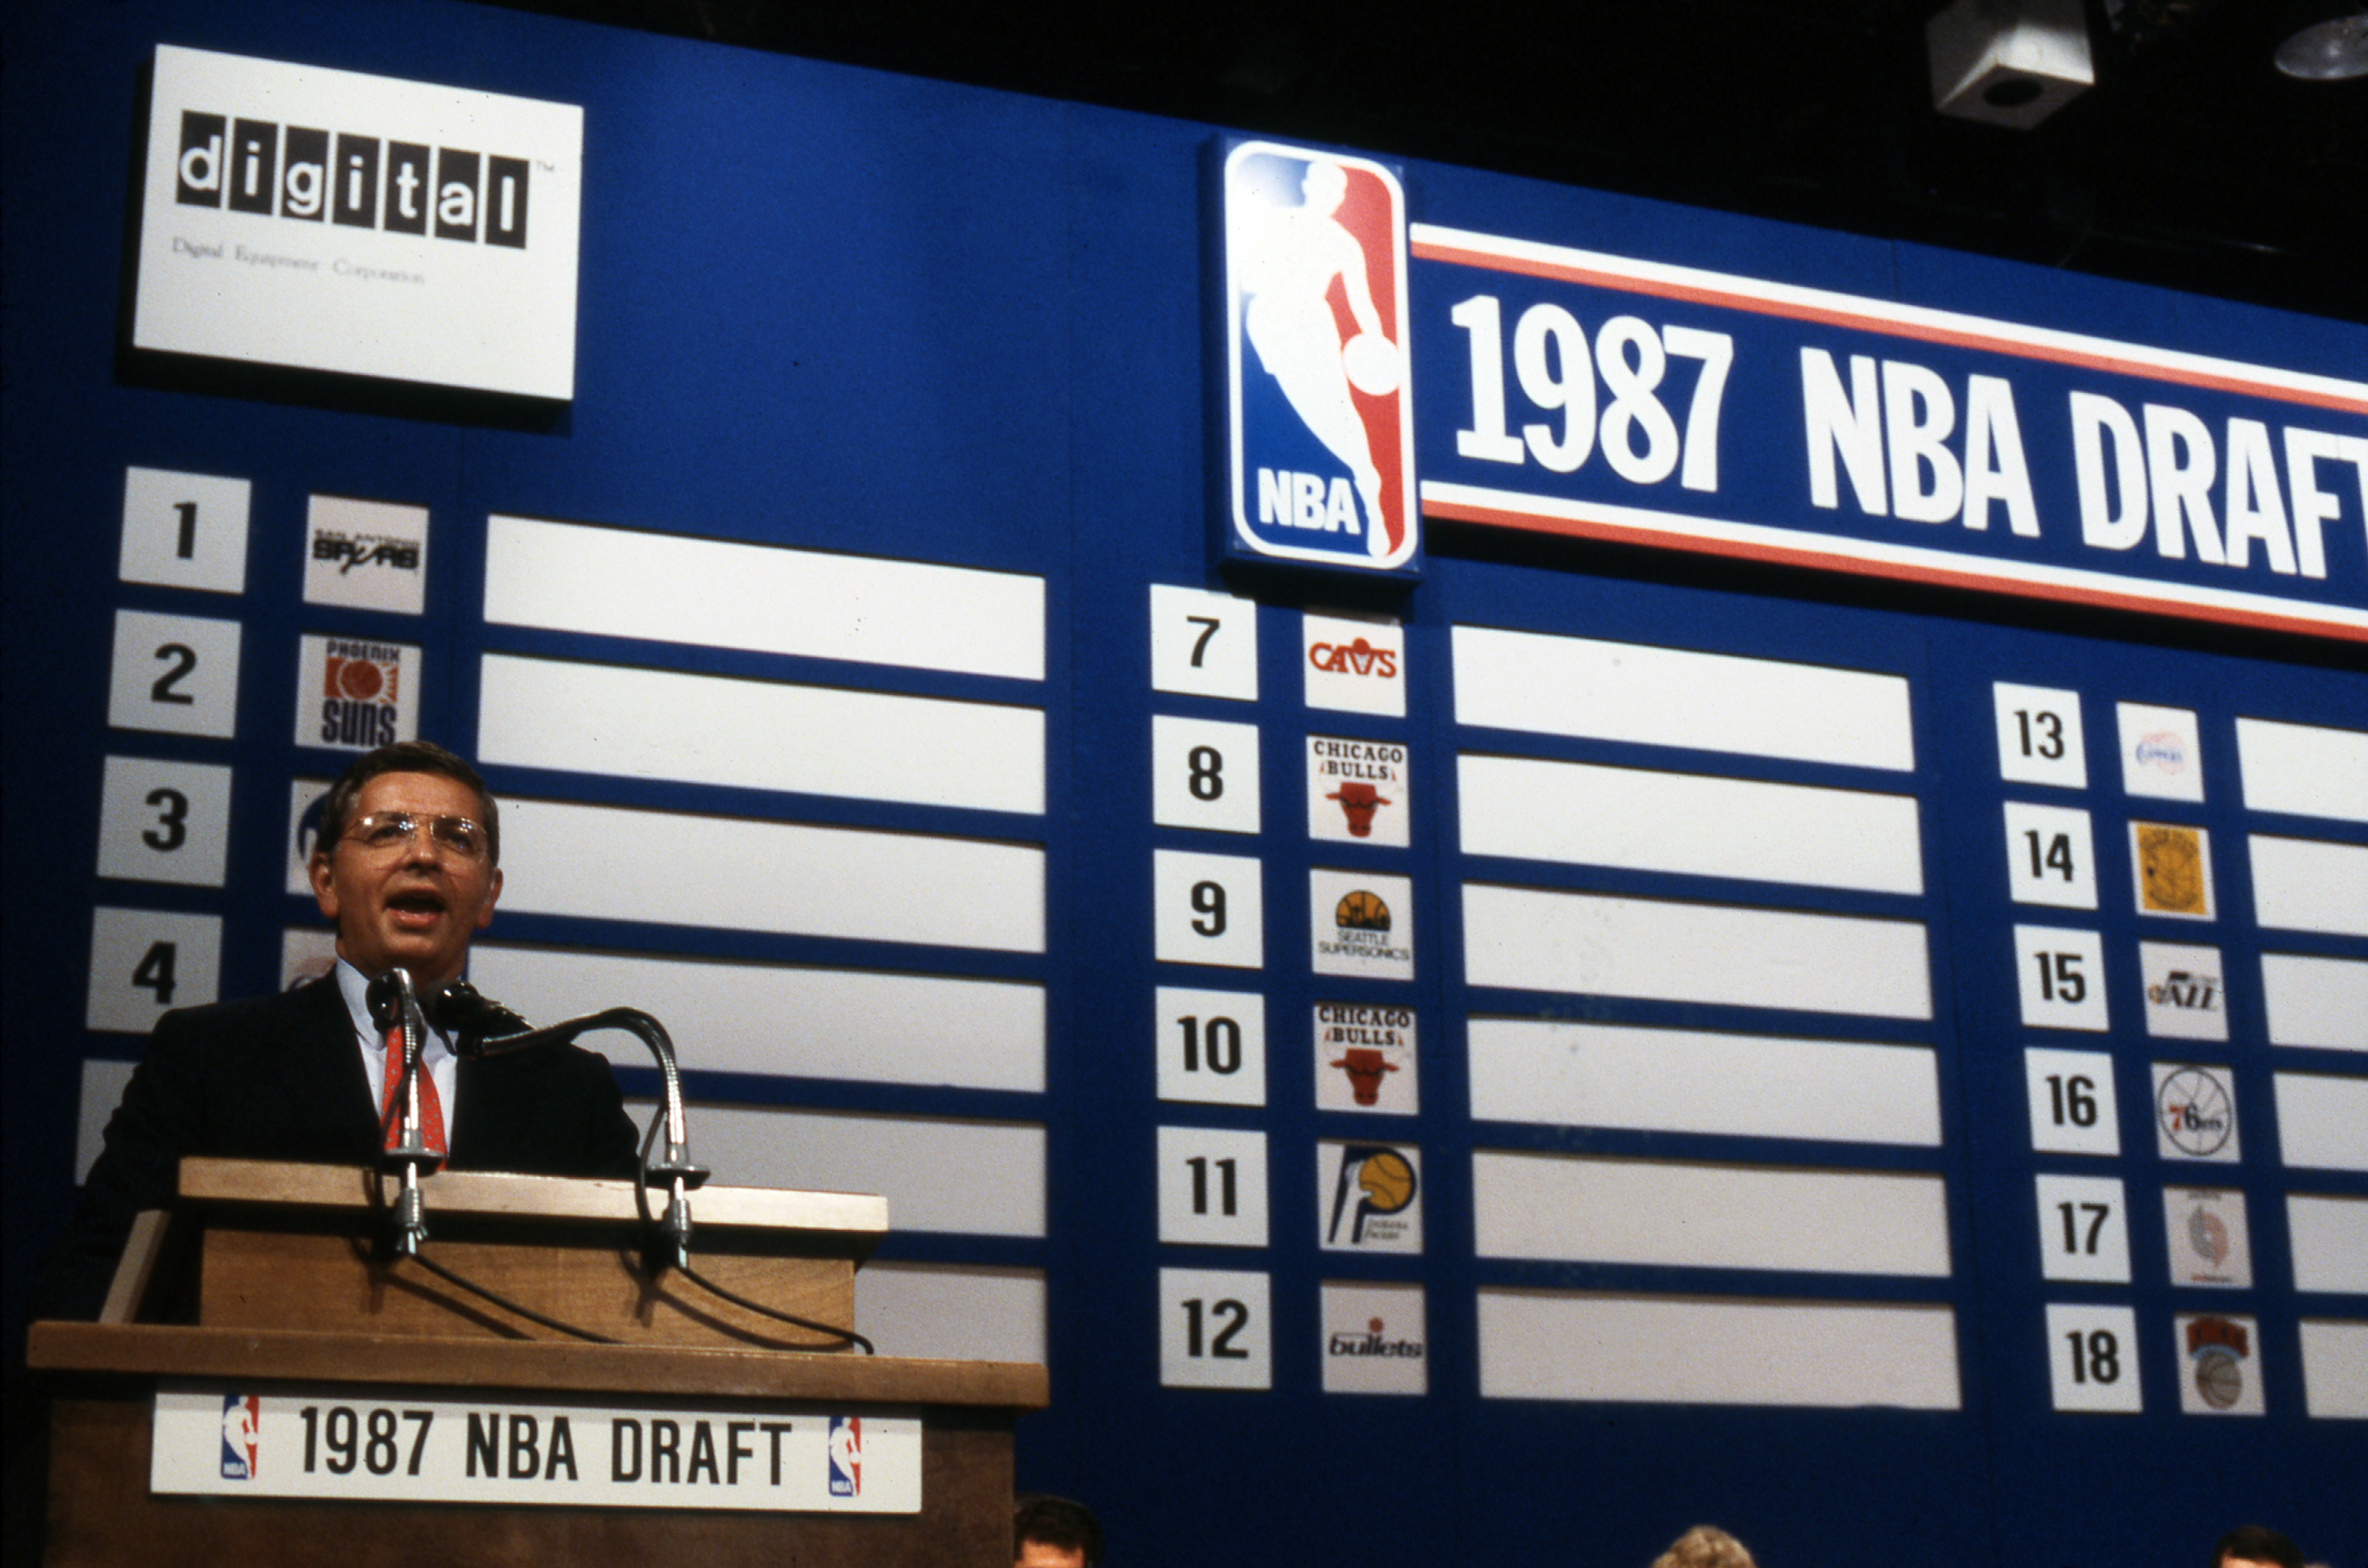 best NBA draft classes